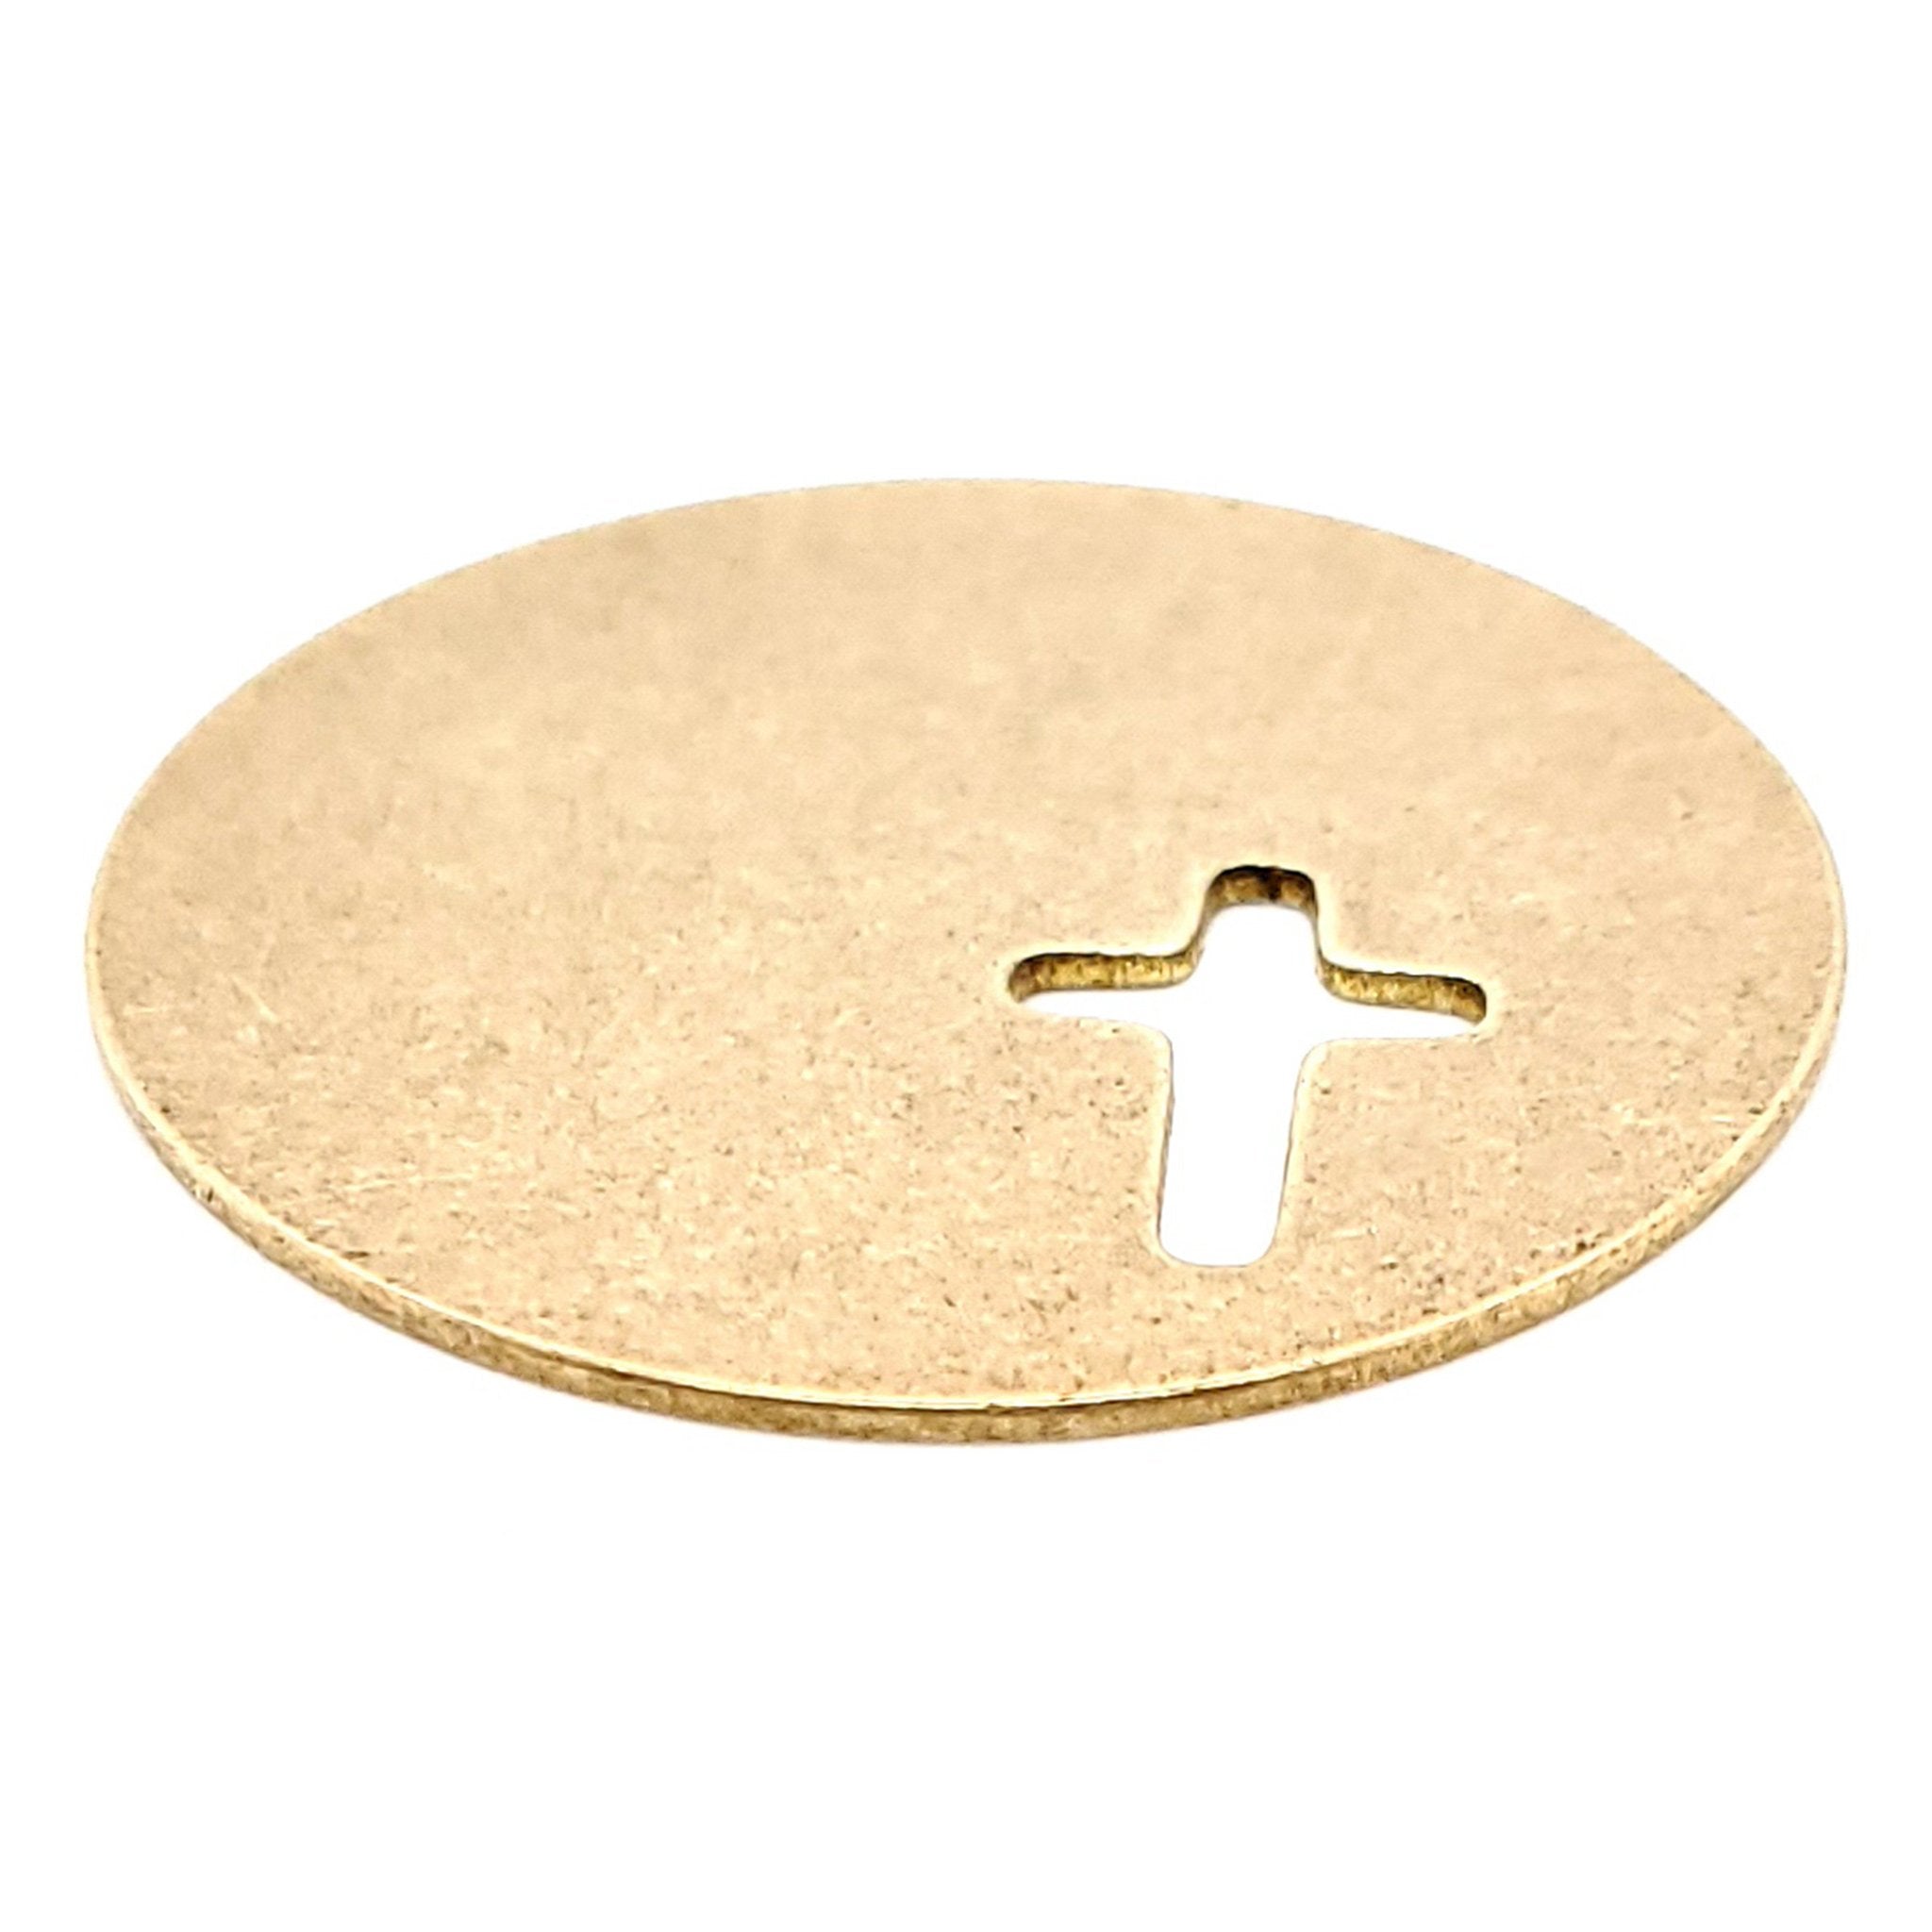 Brass blank round cross cutout pendant at an angle.